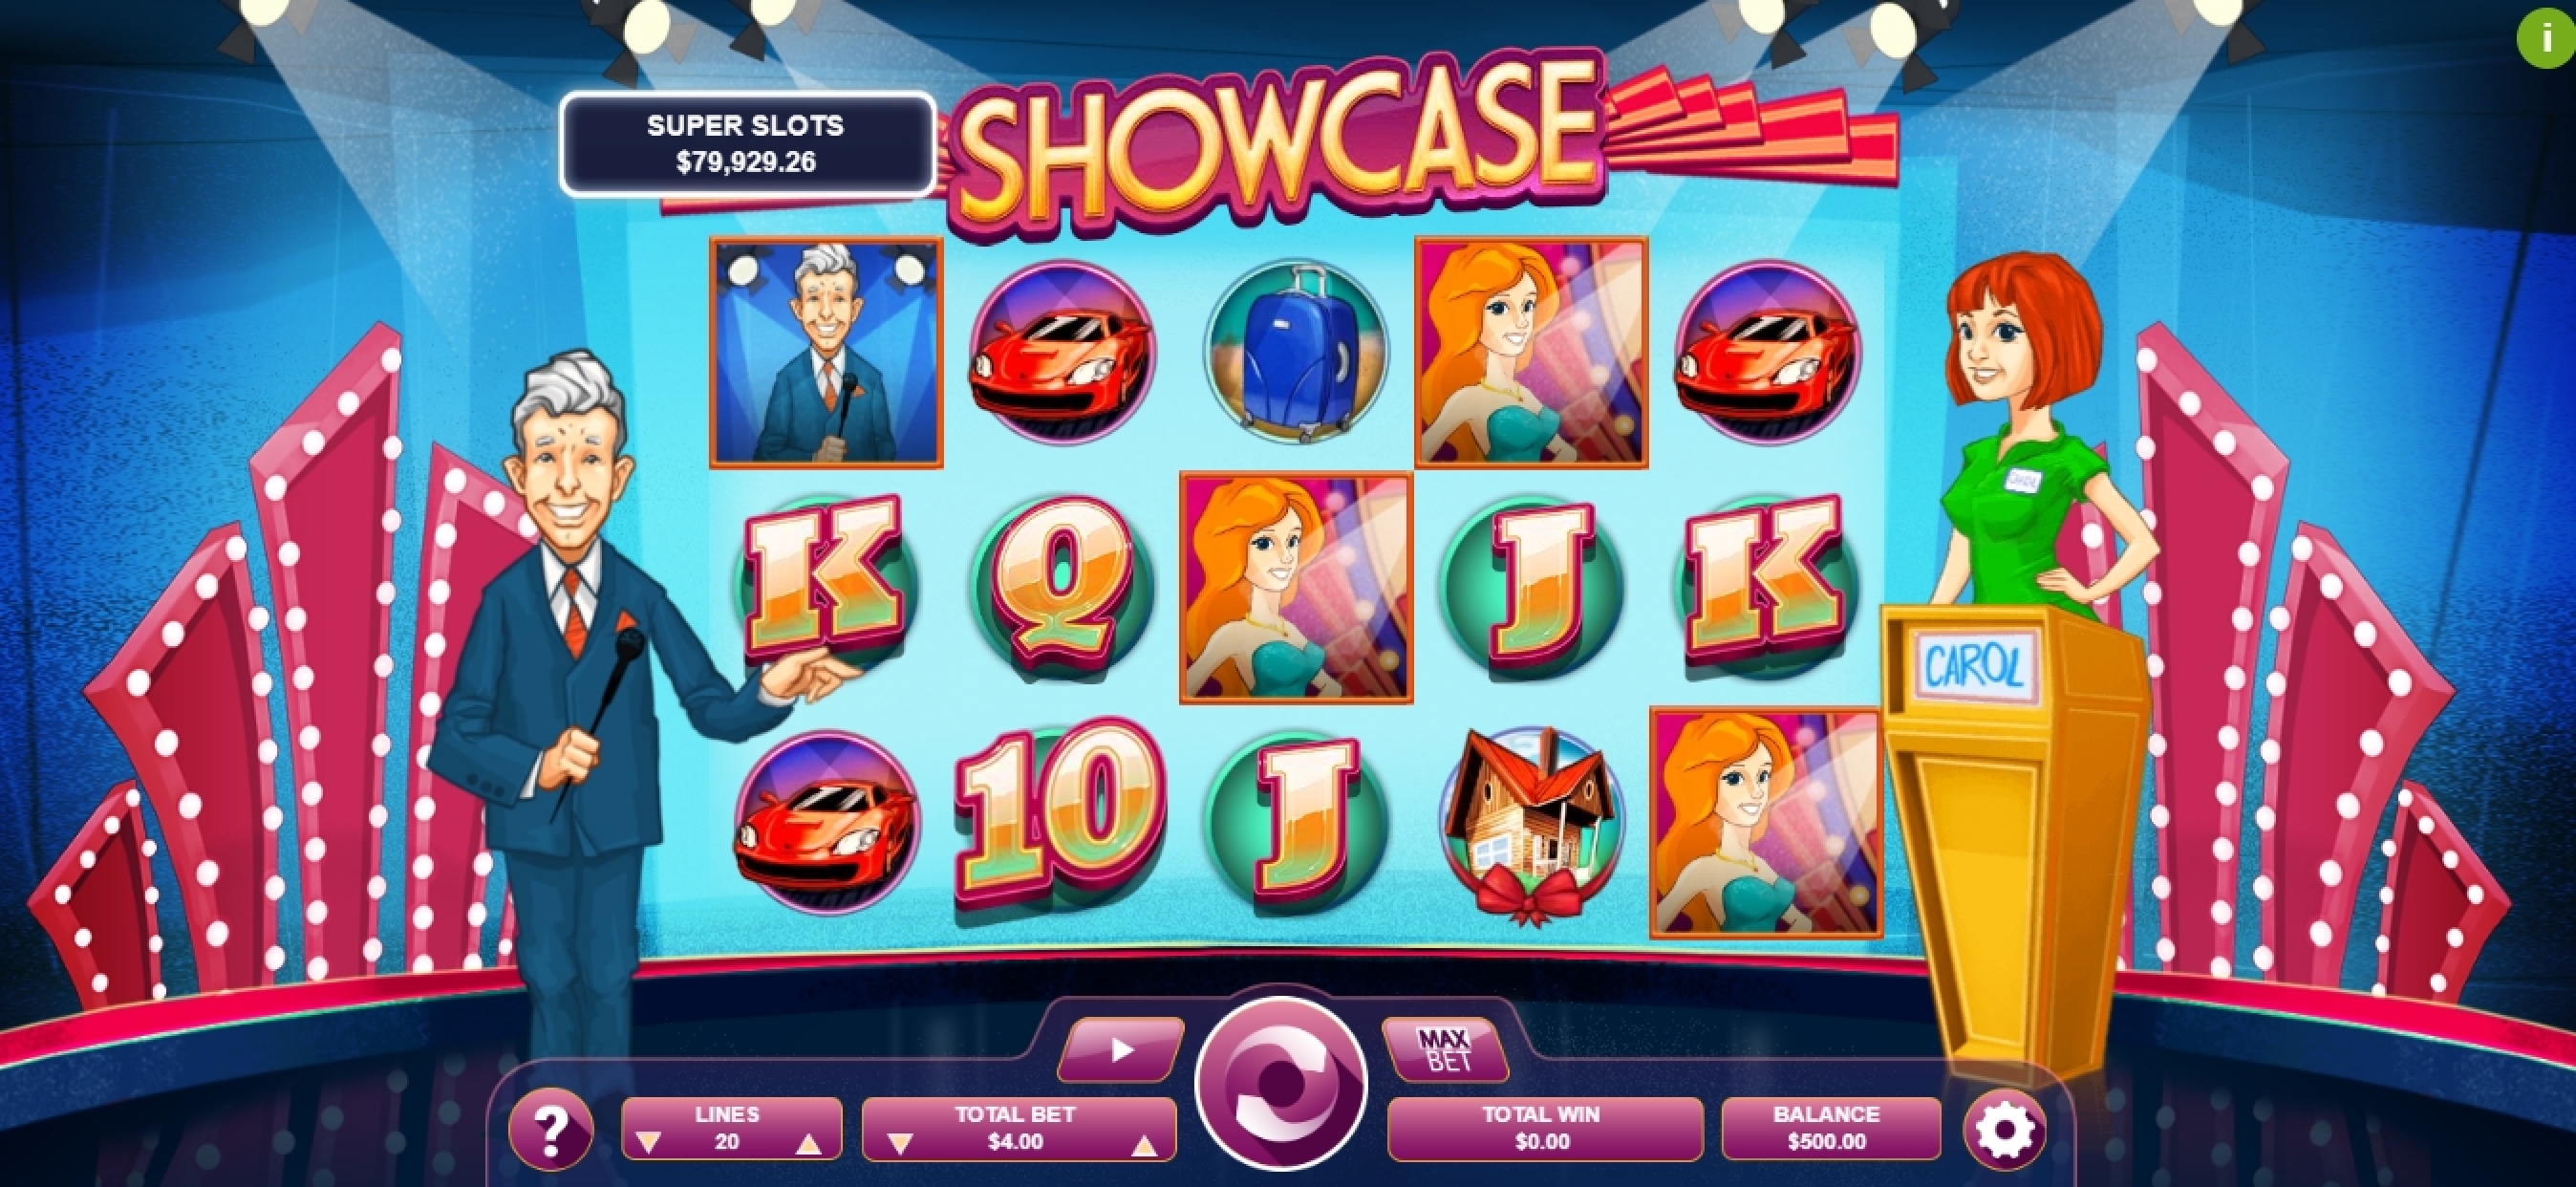 Reels in Showcase Slot Game by Arrows Edge